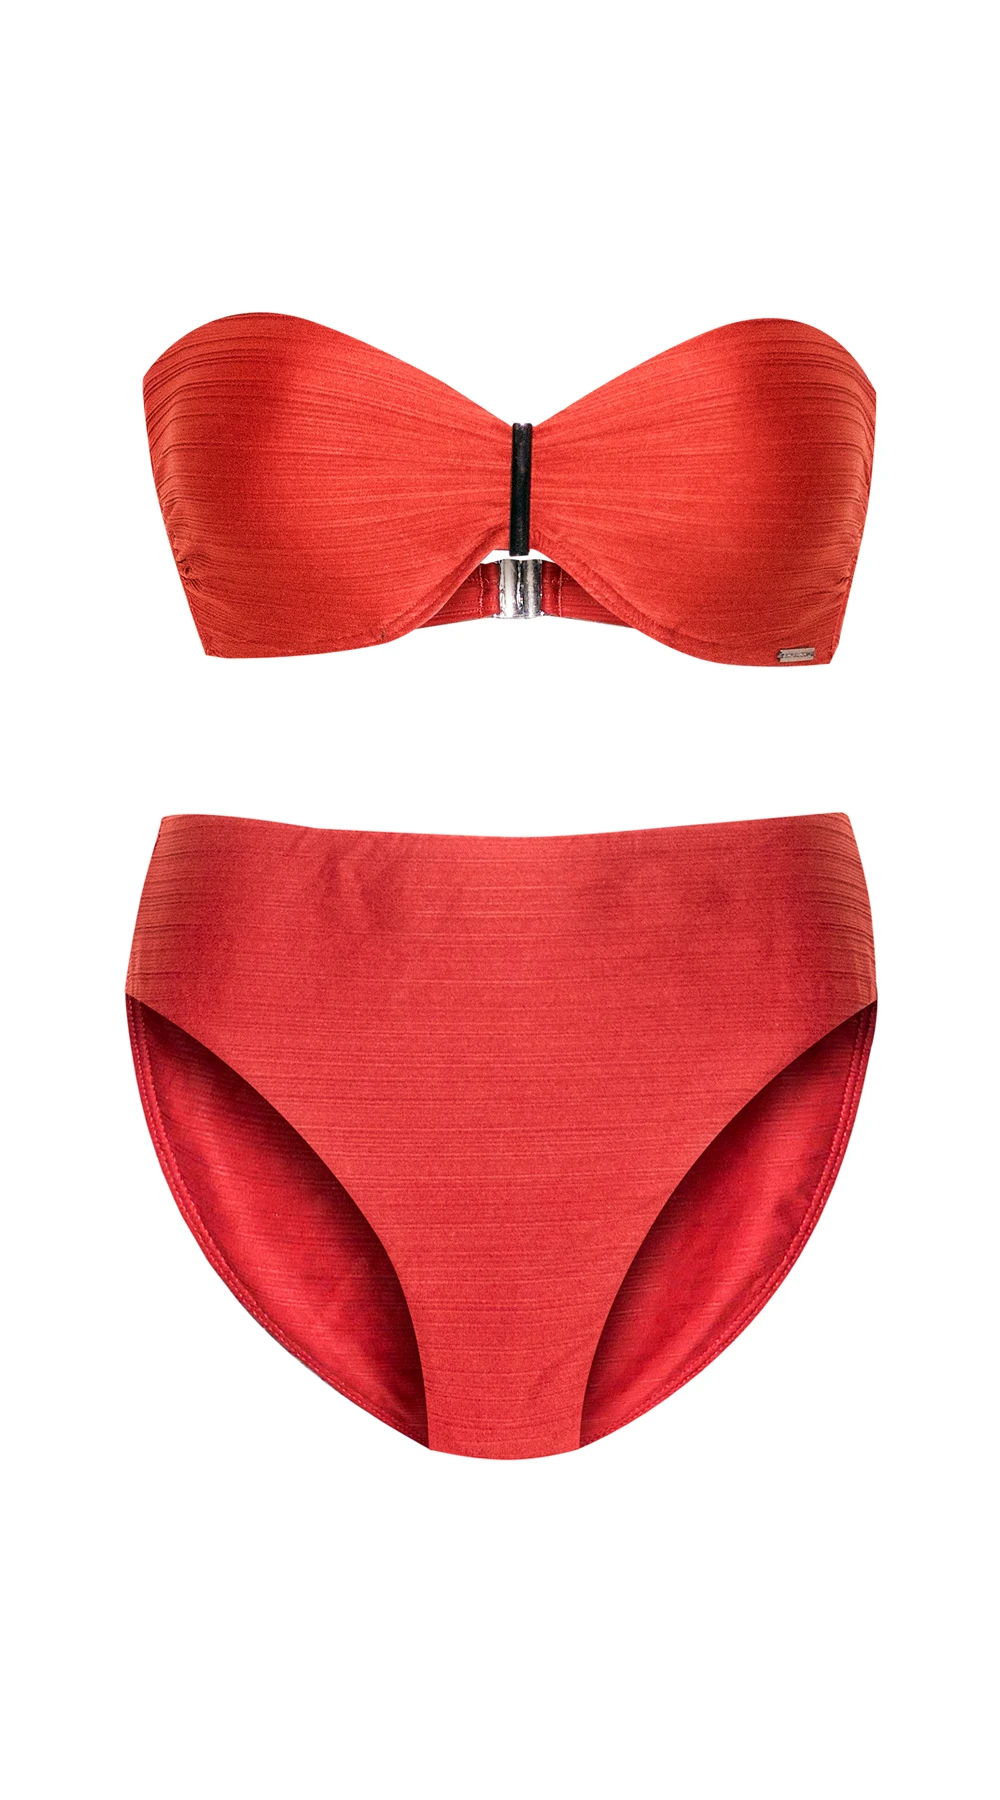 Moontide Swimwear Uk, Moontide Bandeau Bikini, Red Bandeau Bikini Uk, Trstured Swimwear Uk, Textured Bikini Uk, Moonitde Textured Swimwear